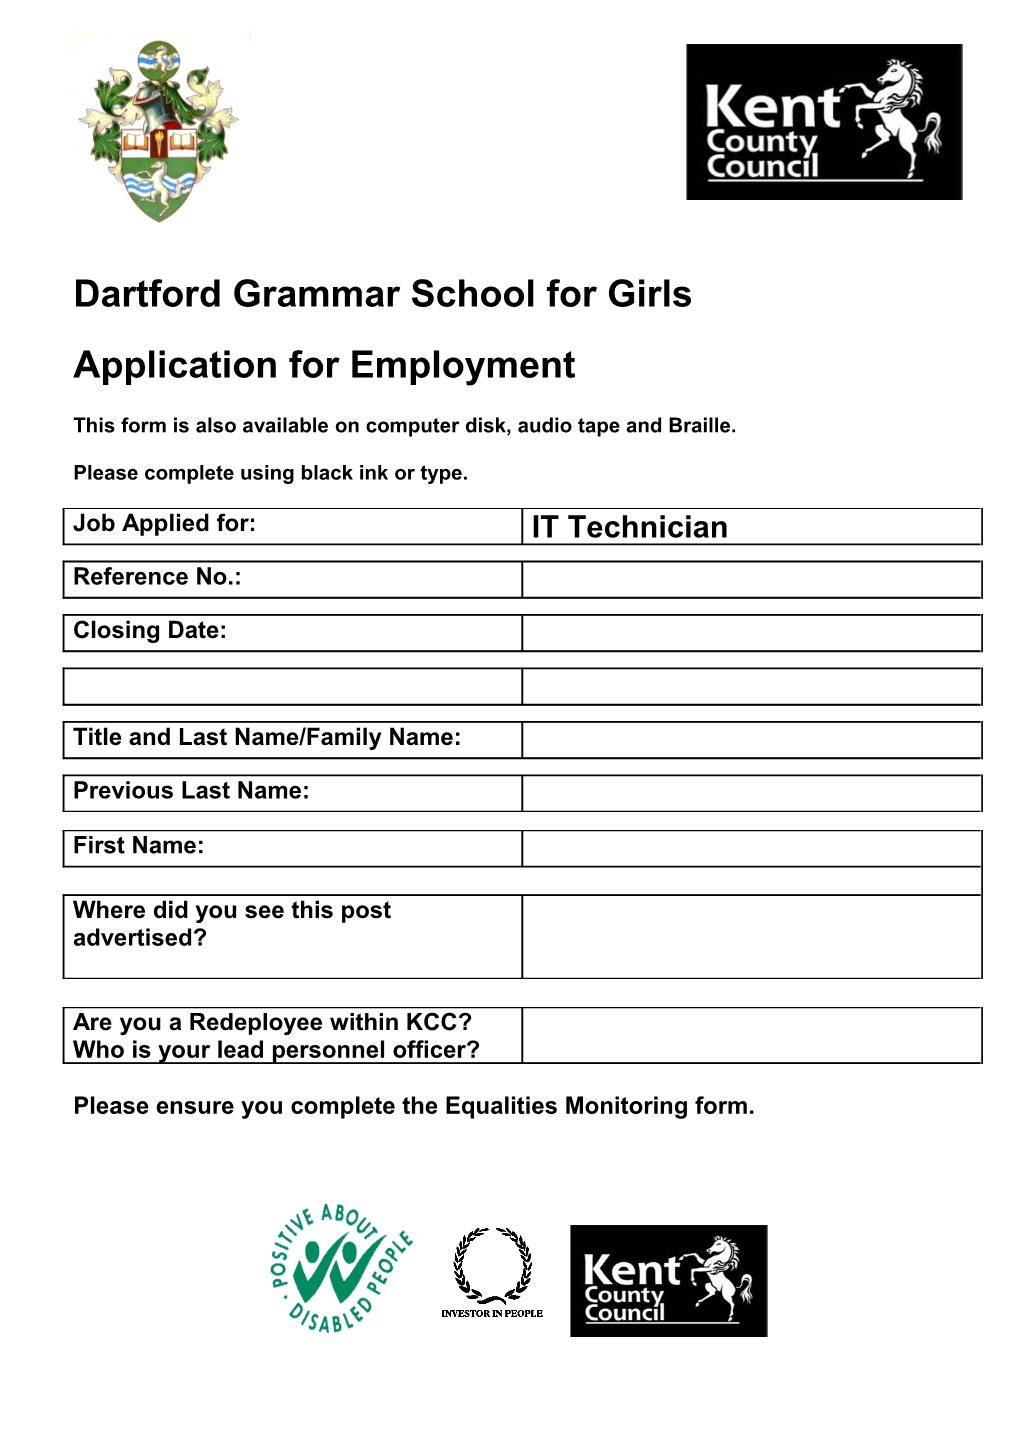 Dartfordgrammar School for Girls